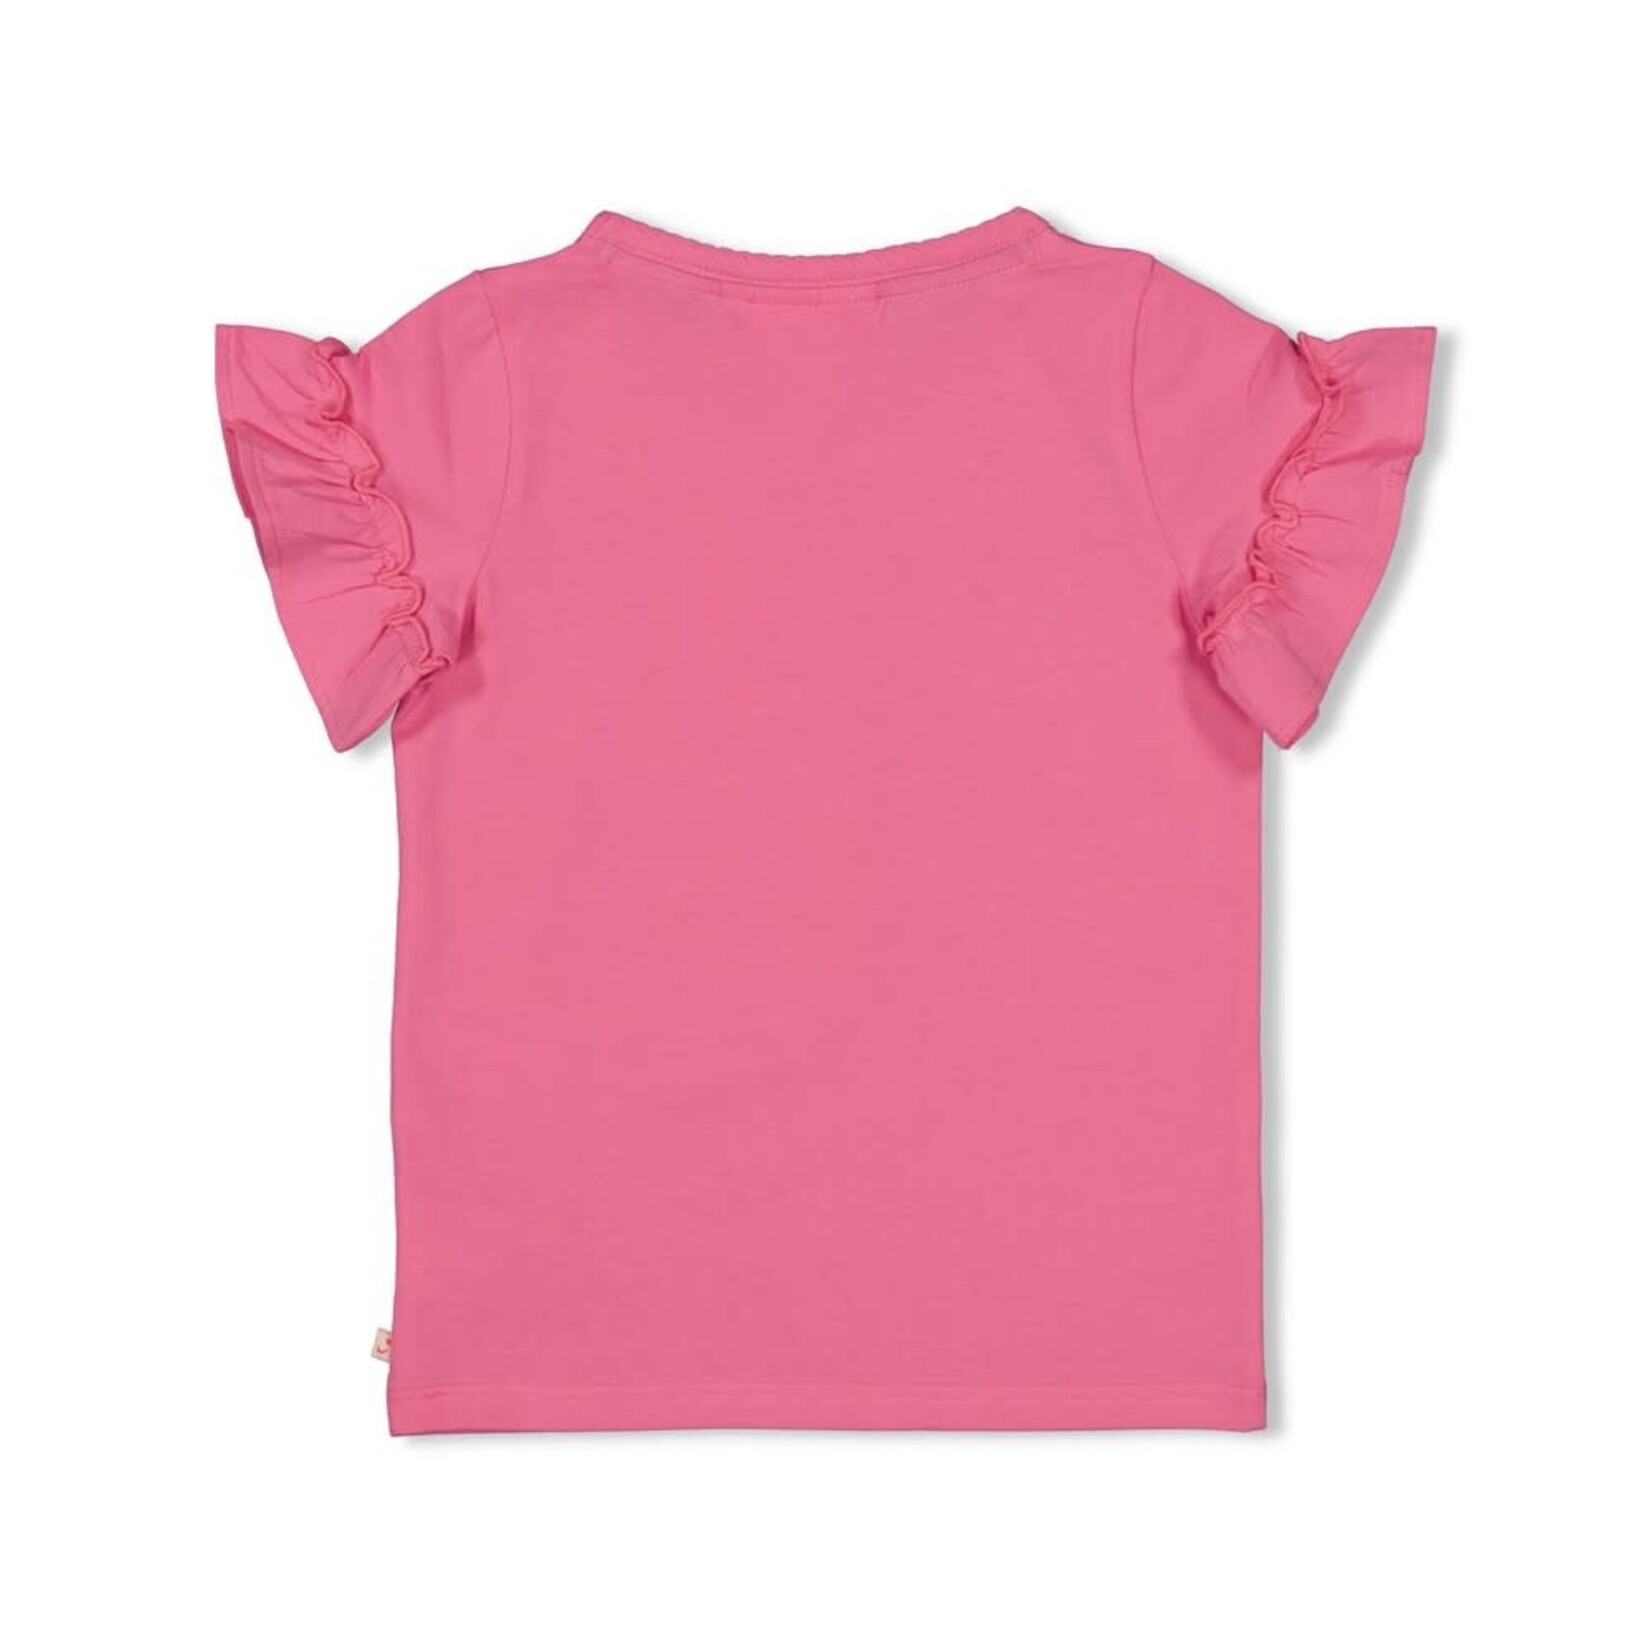 Jubel T-shirt - Berry Nice roze